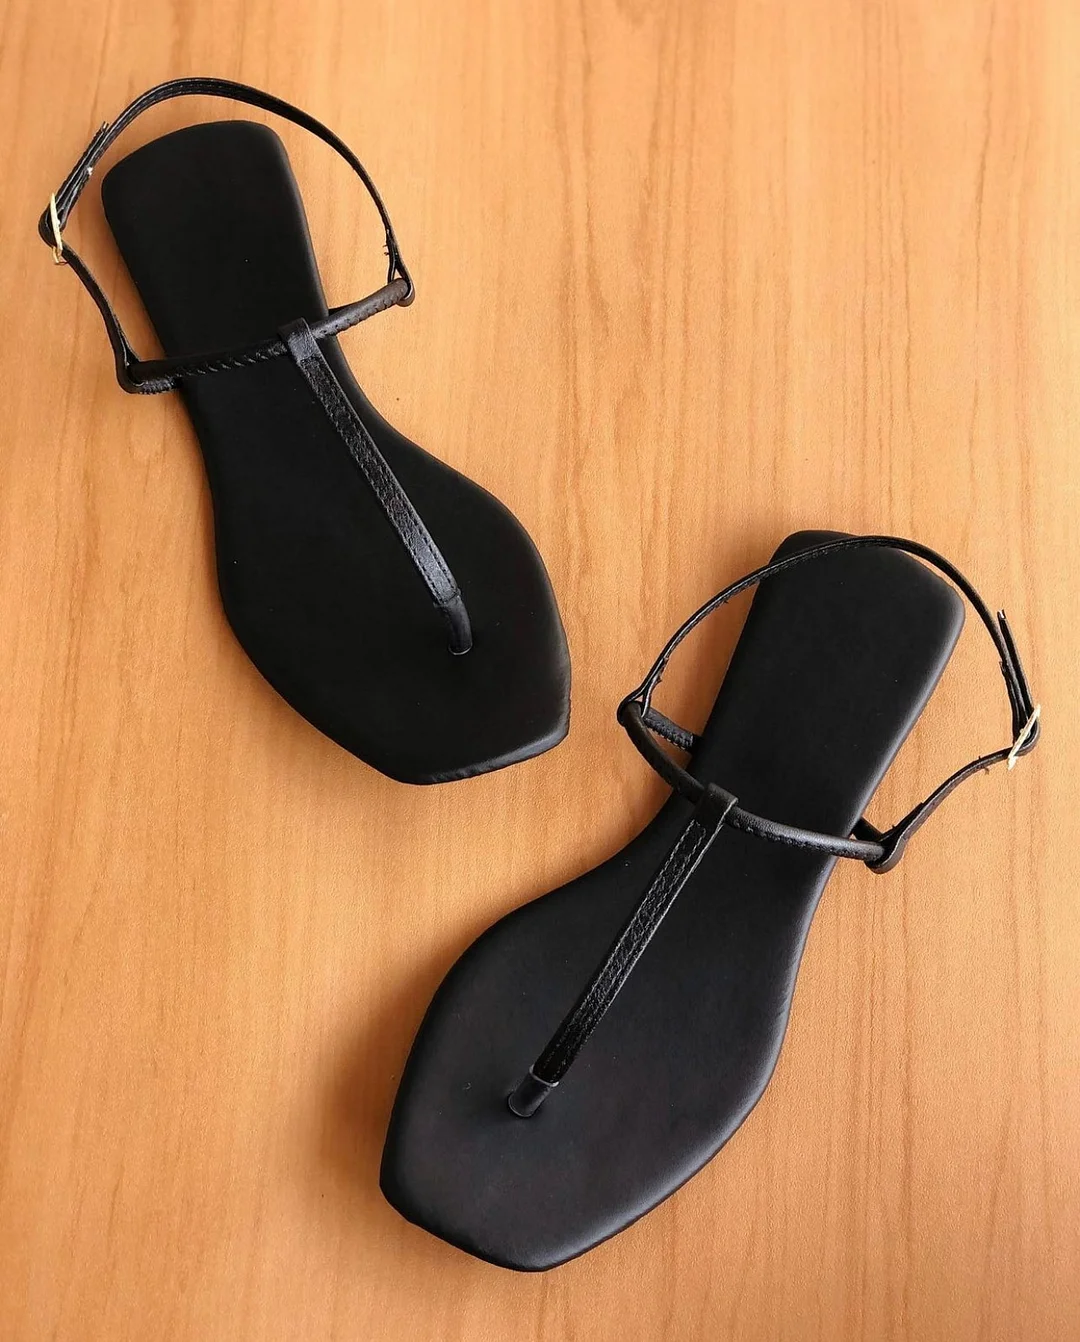 Tanguoant Flat Women's Beach Sandals Flip Flops Summer T-strap Soft Women Sandals Ankle Strap Seaside Holiday Sandals for Girls